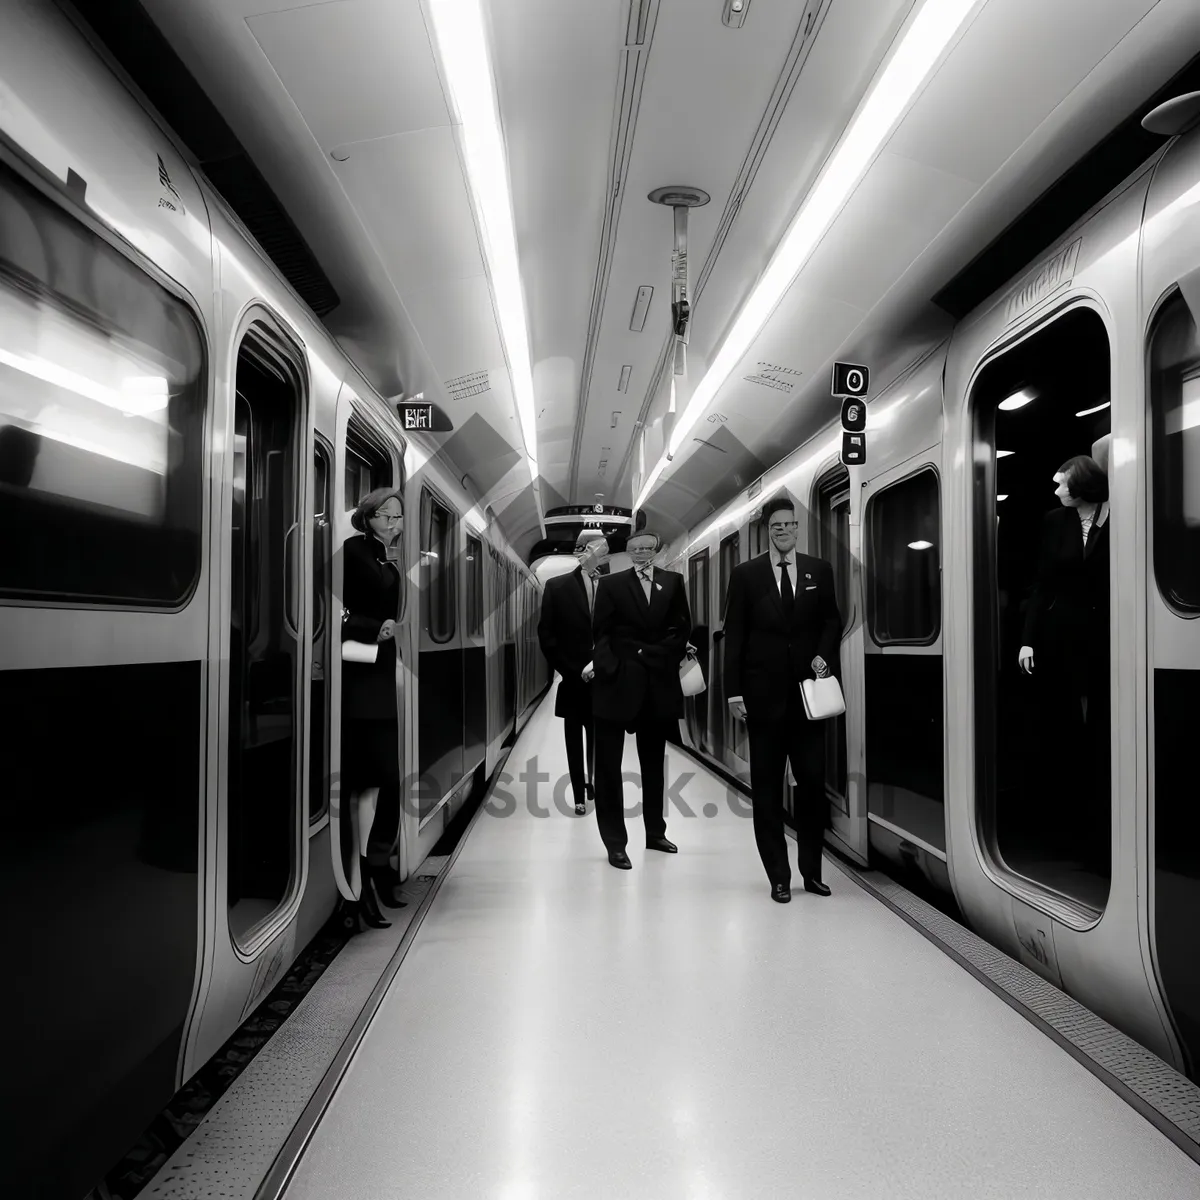 Picture of Urban Transit: Modern Subway Station Interior with Speeding Train